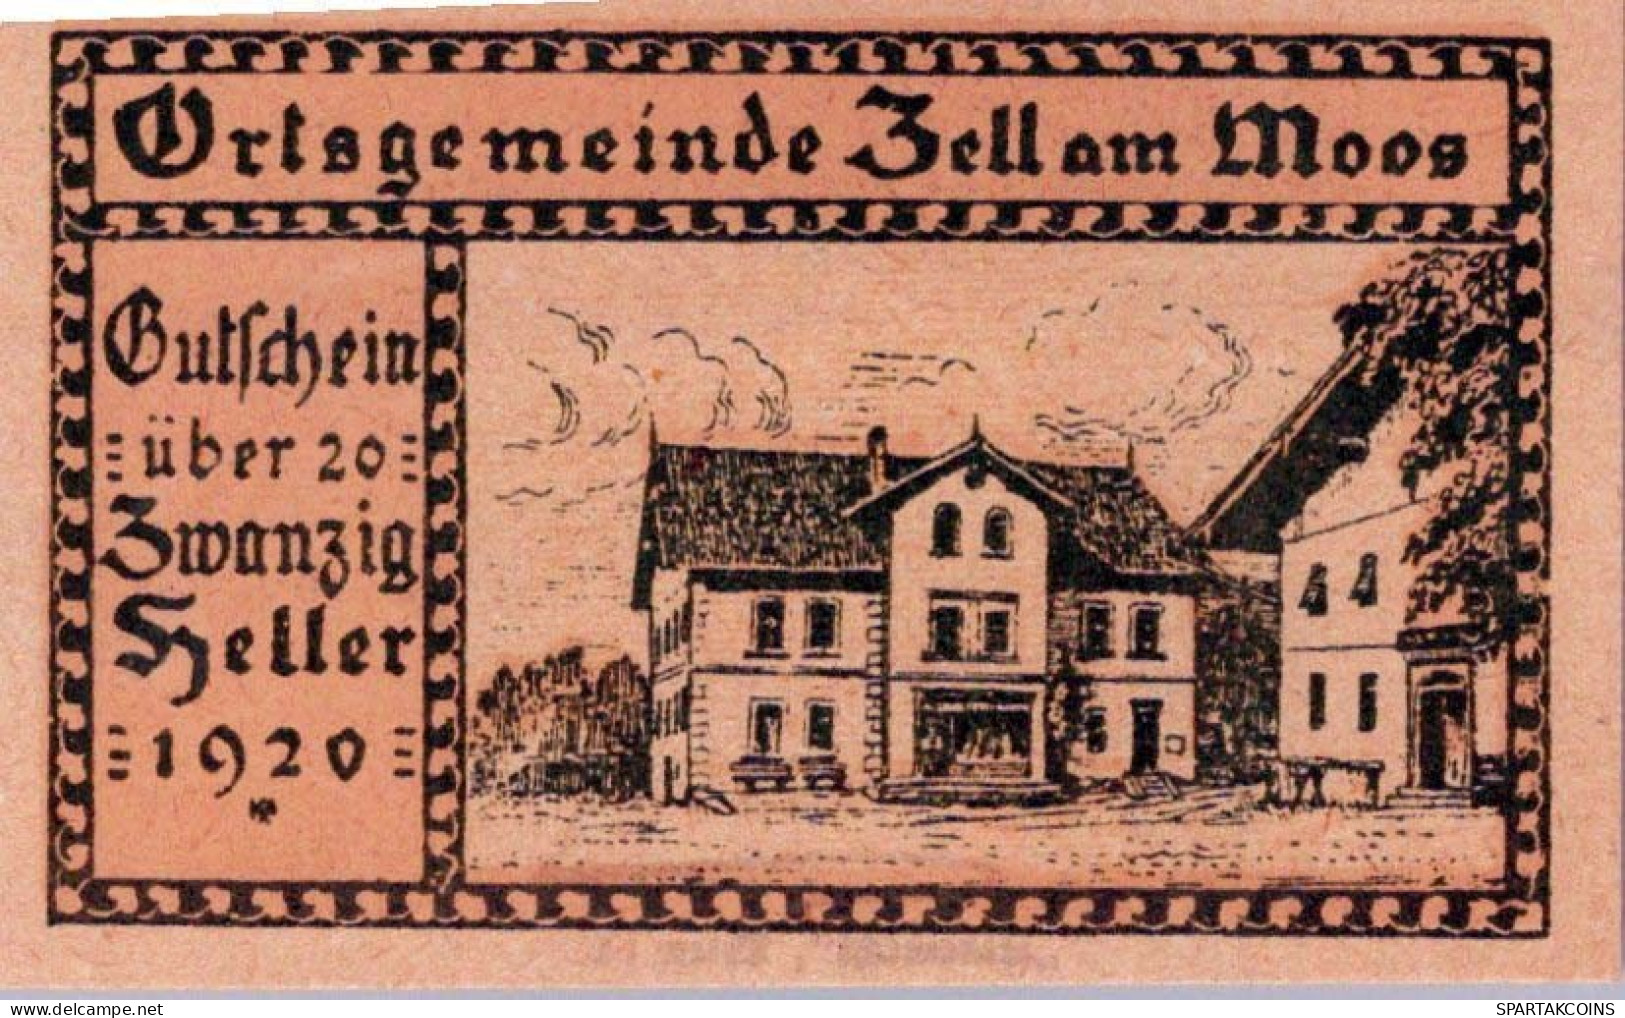 20 HELLER 1920 Stadt ZELL AM MOOS Oberösterreich Österreich Notgeld #PE163 - [11] Lokale Uitgaven